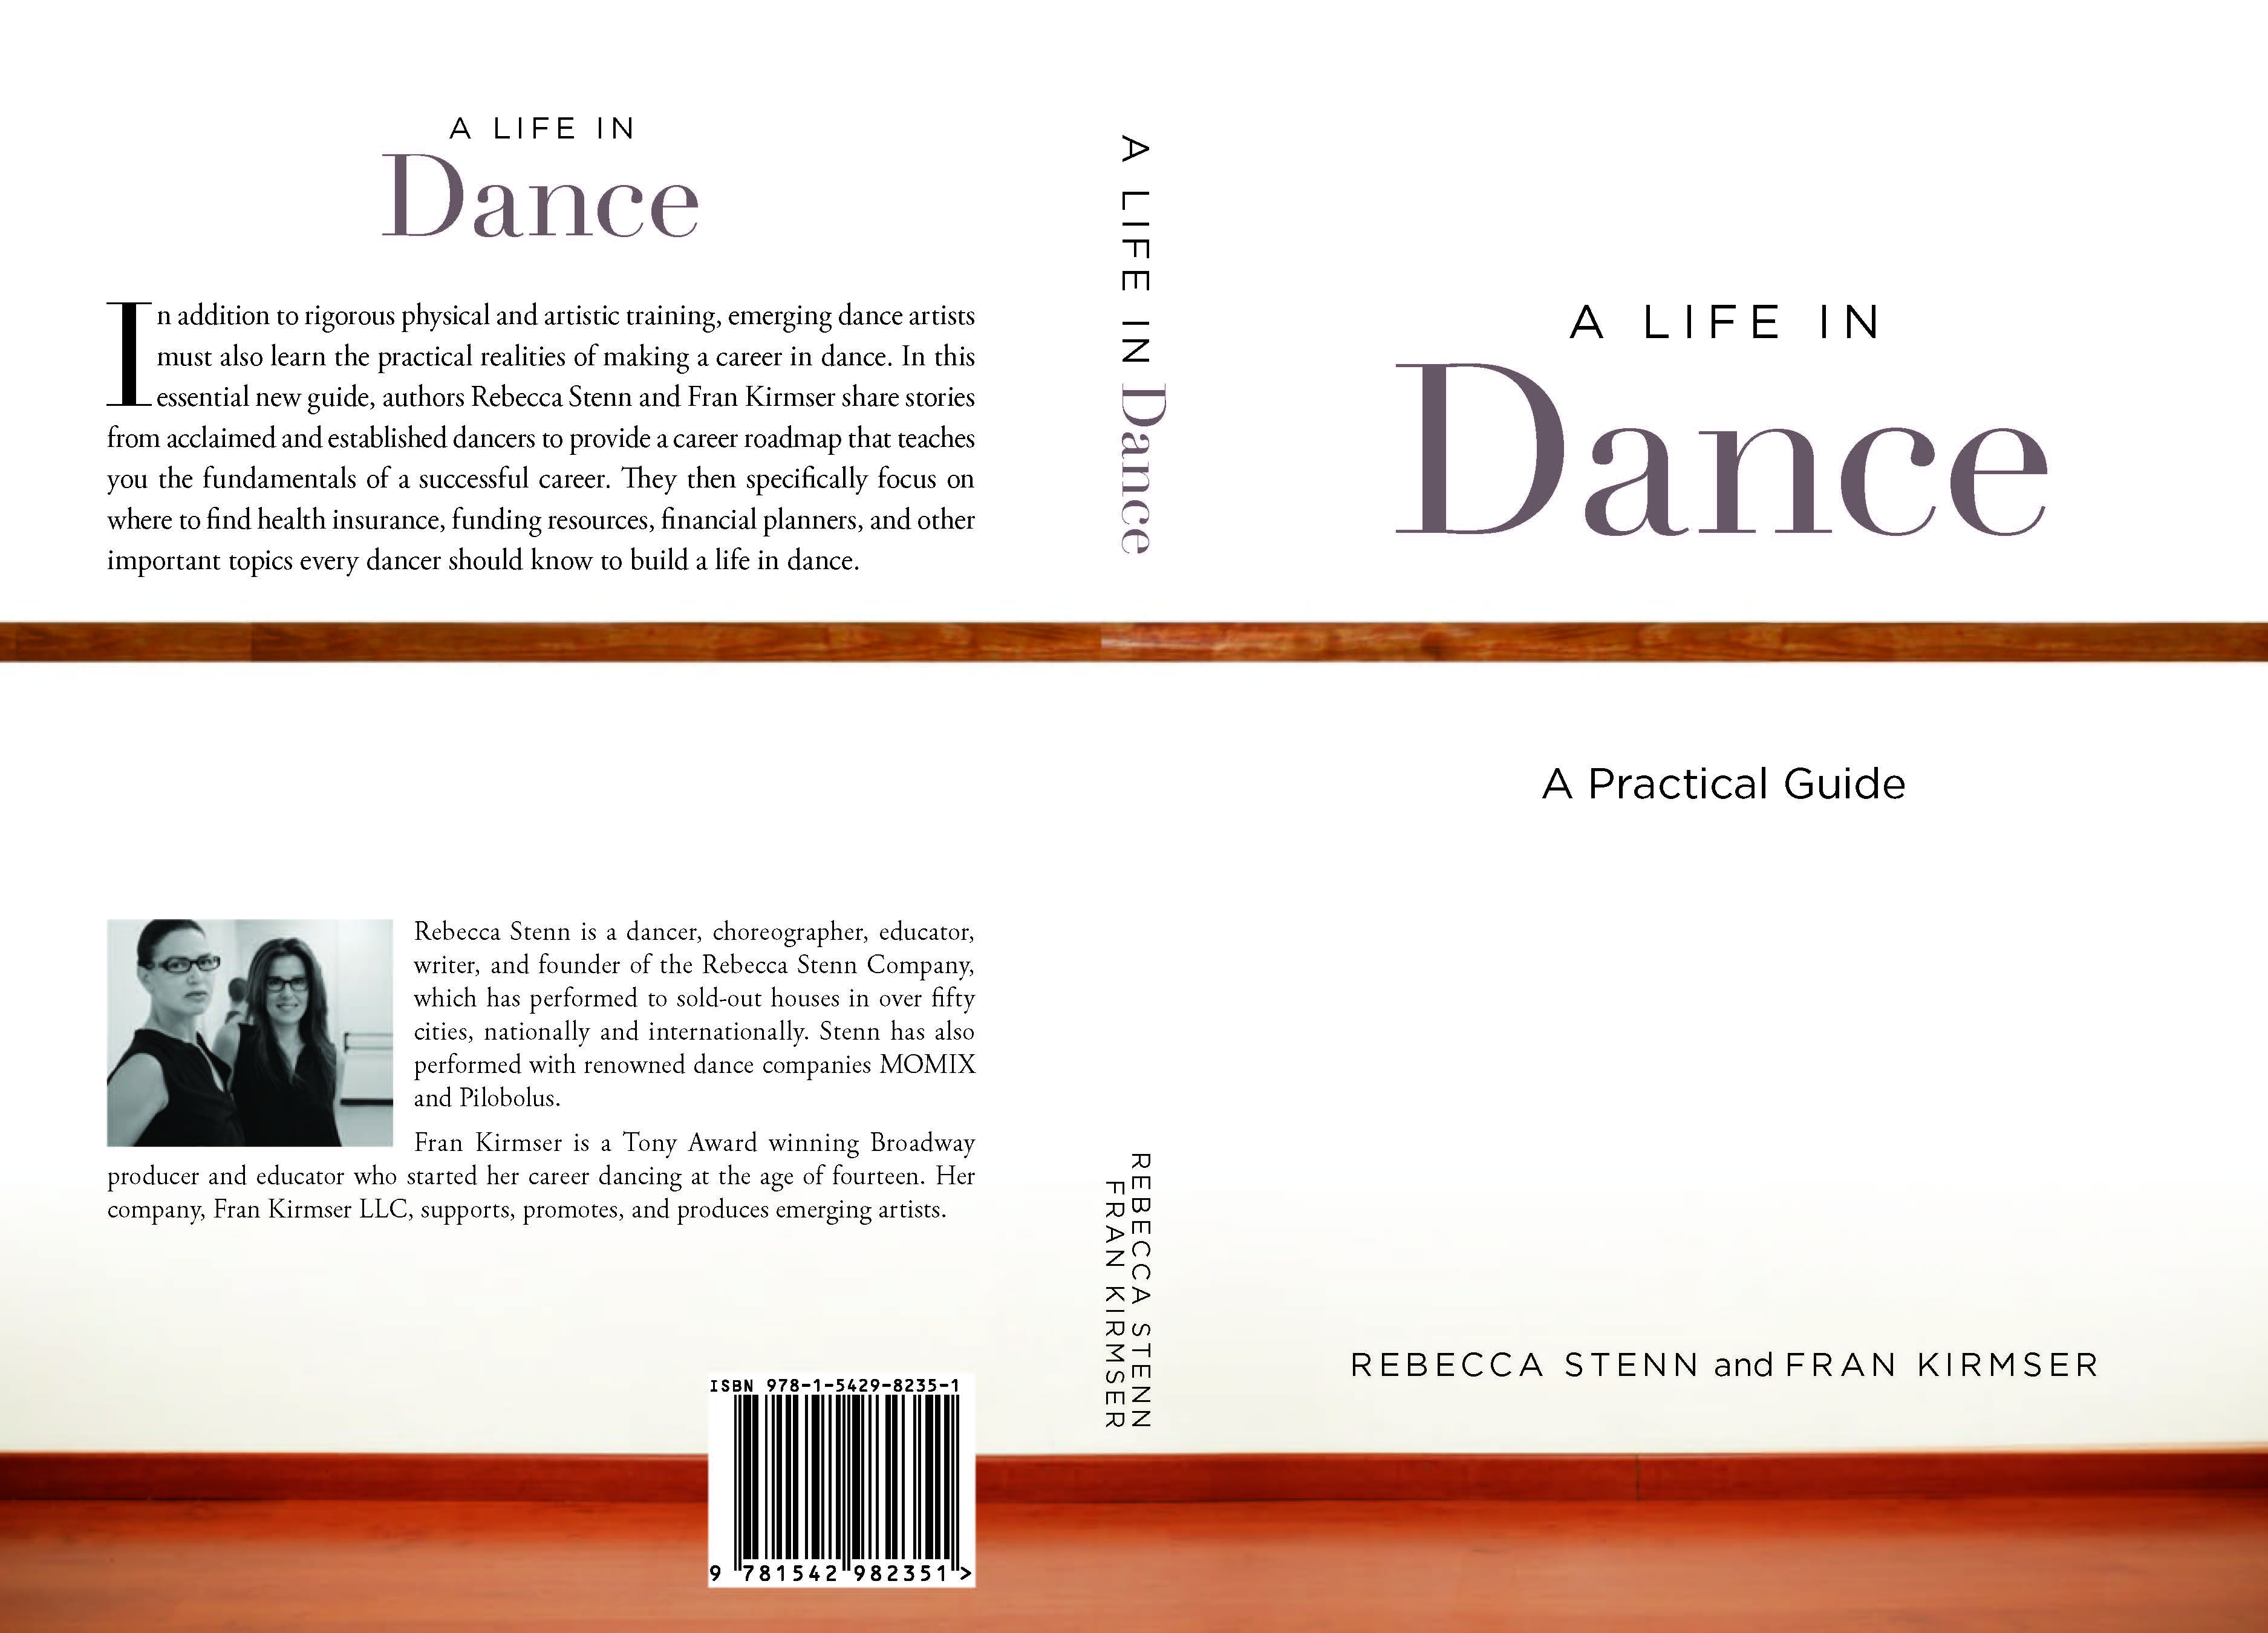 Publication and release Rebecca Stenn’s book A Life in Dance: A Practical Guide